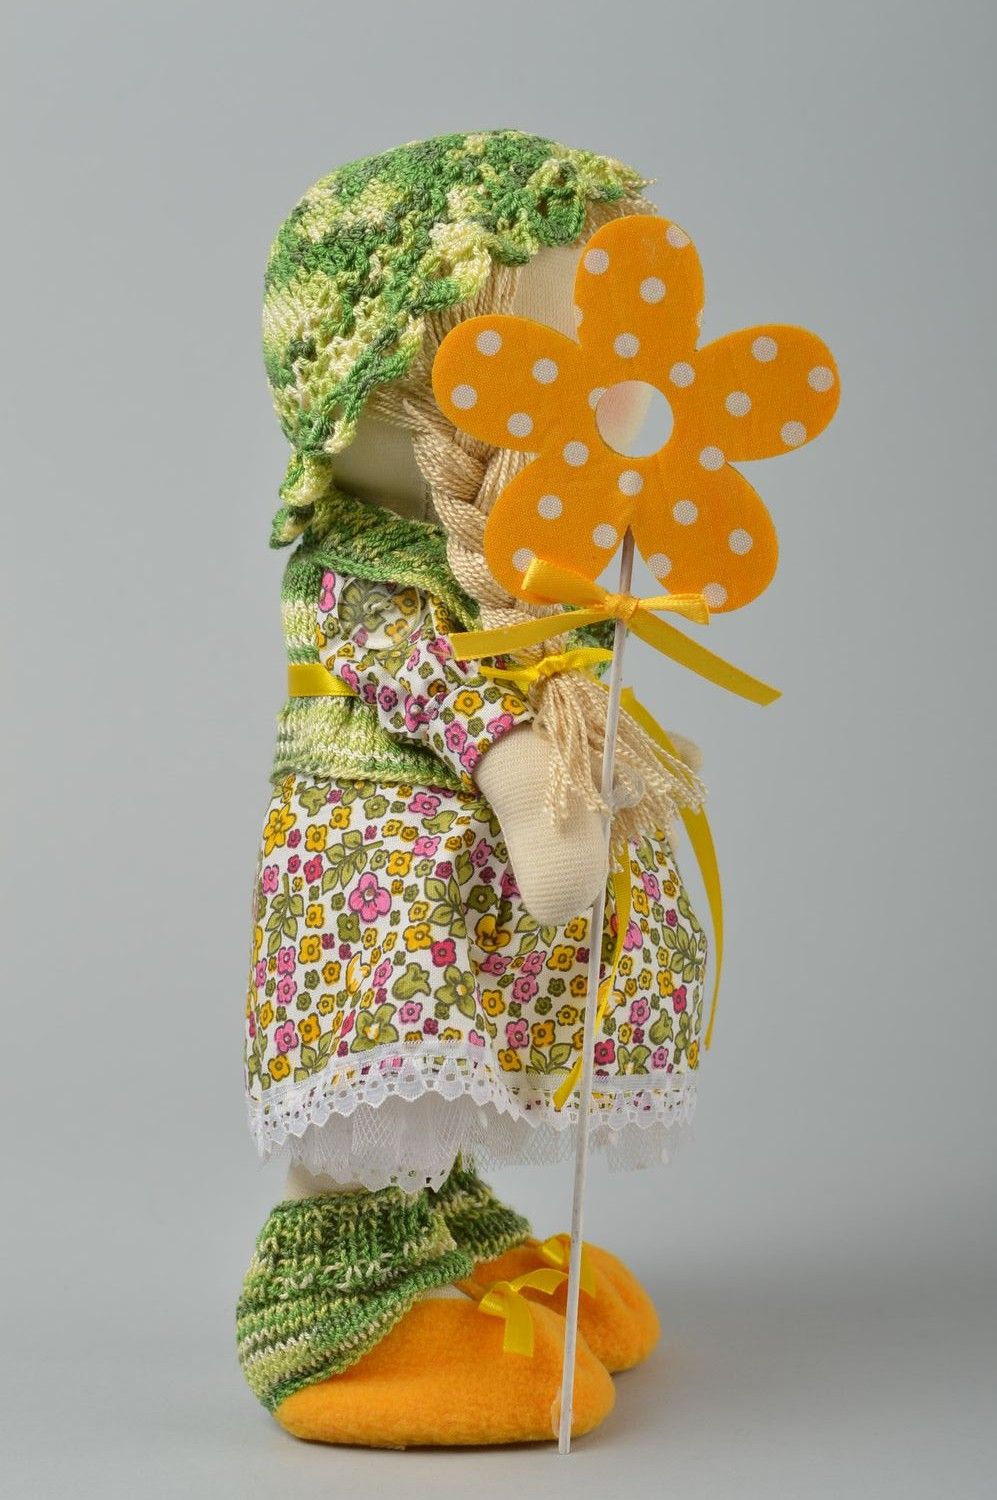 Handmade doll designer doll textile doll fabric doll gift for girl decor ideas photo 3